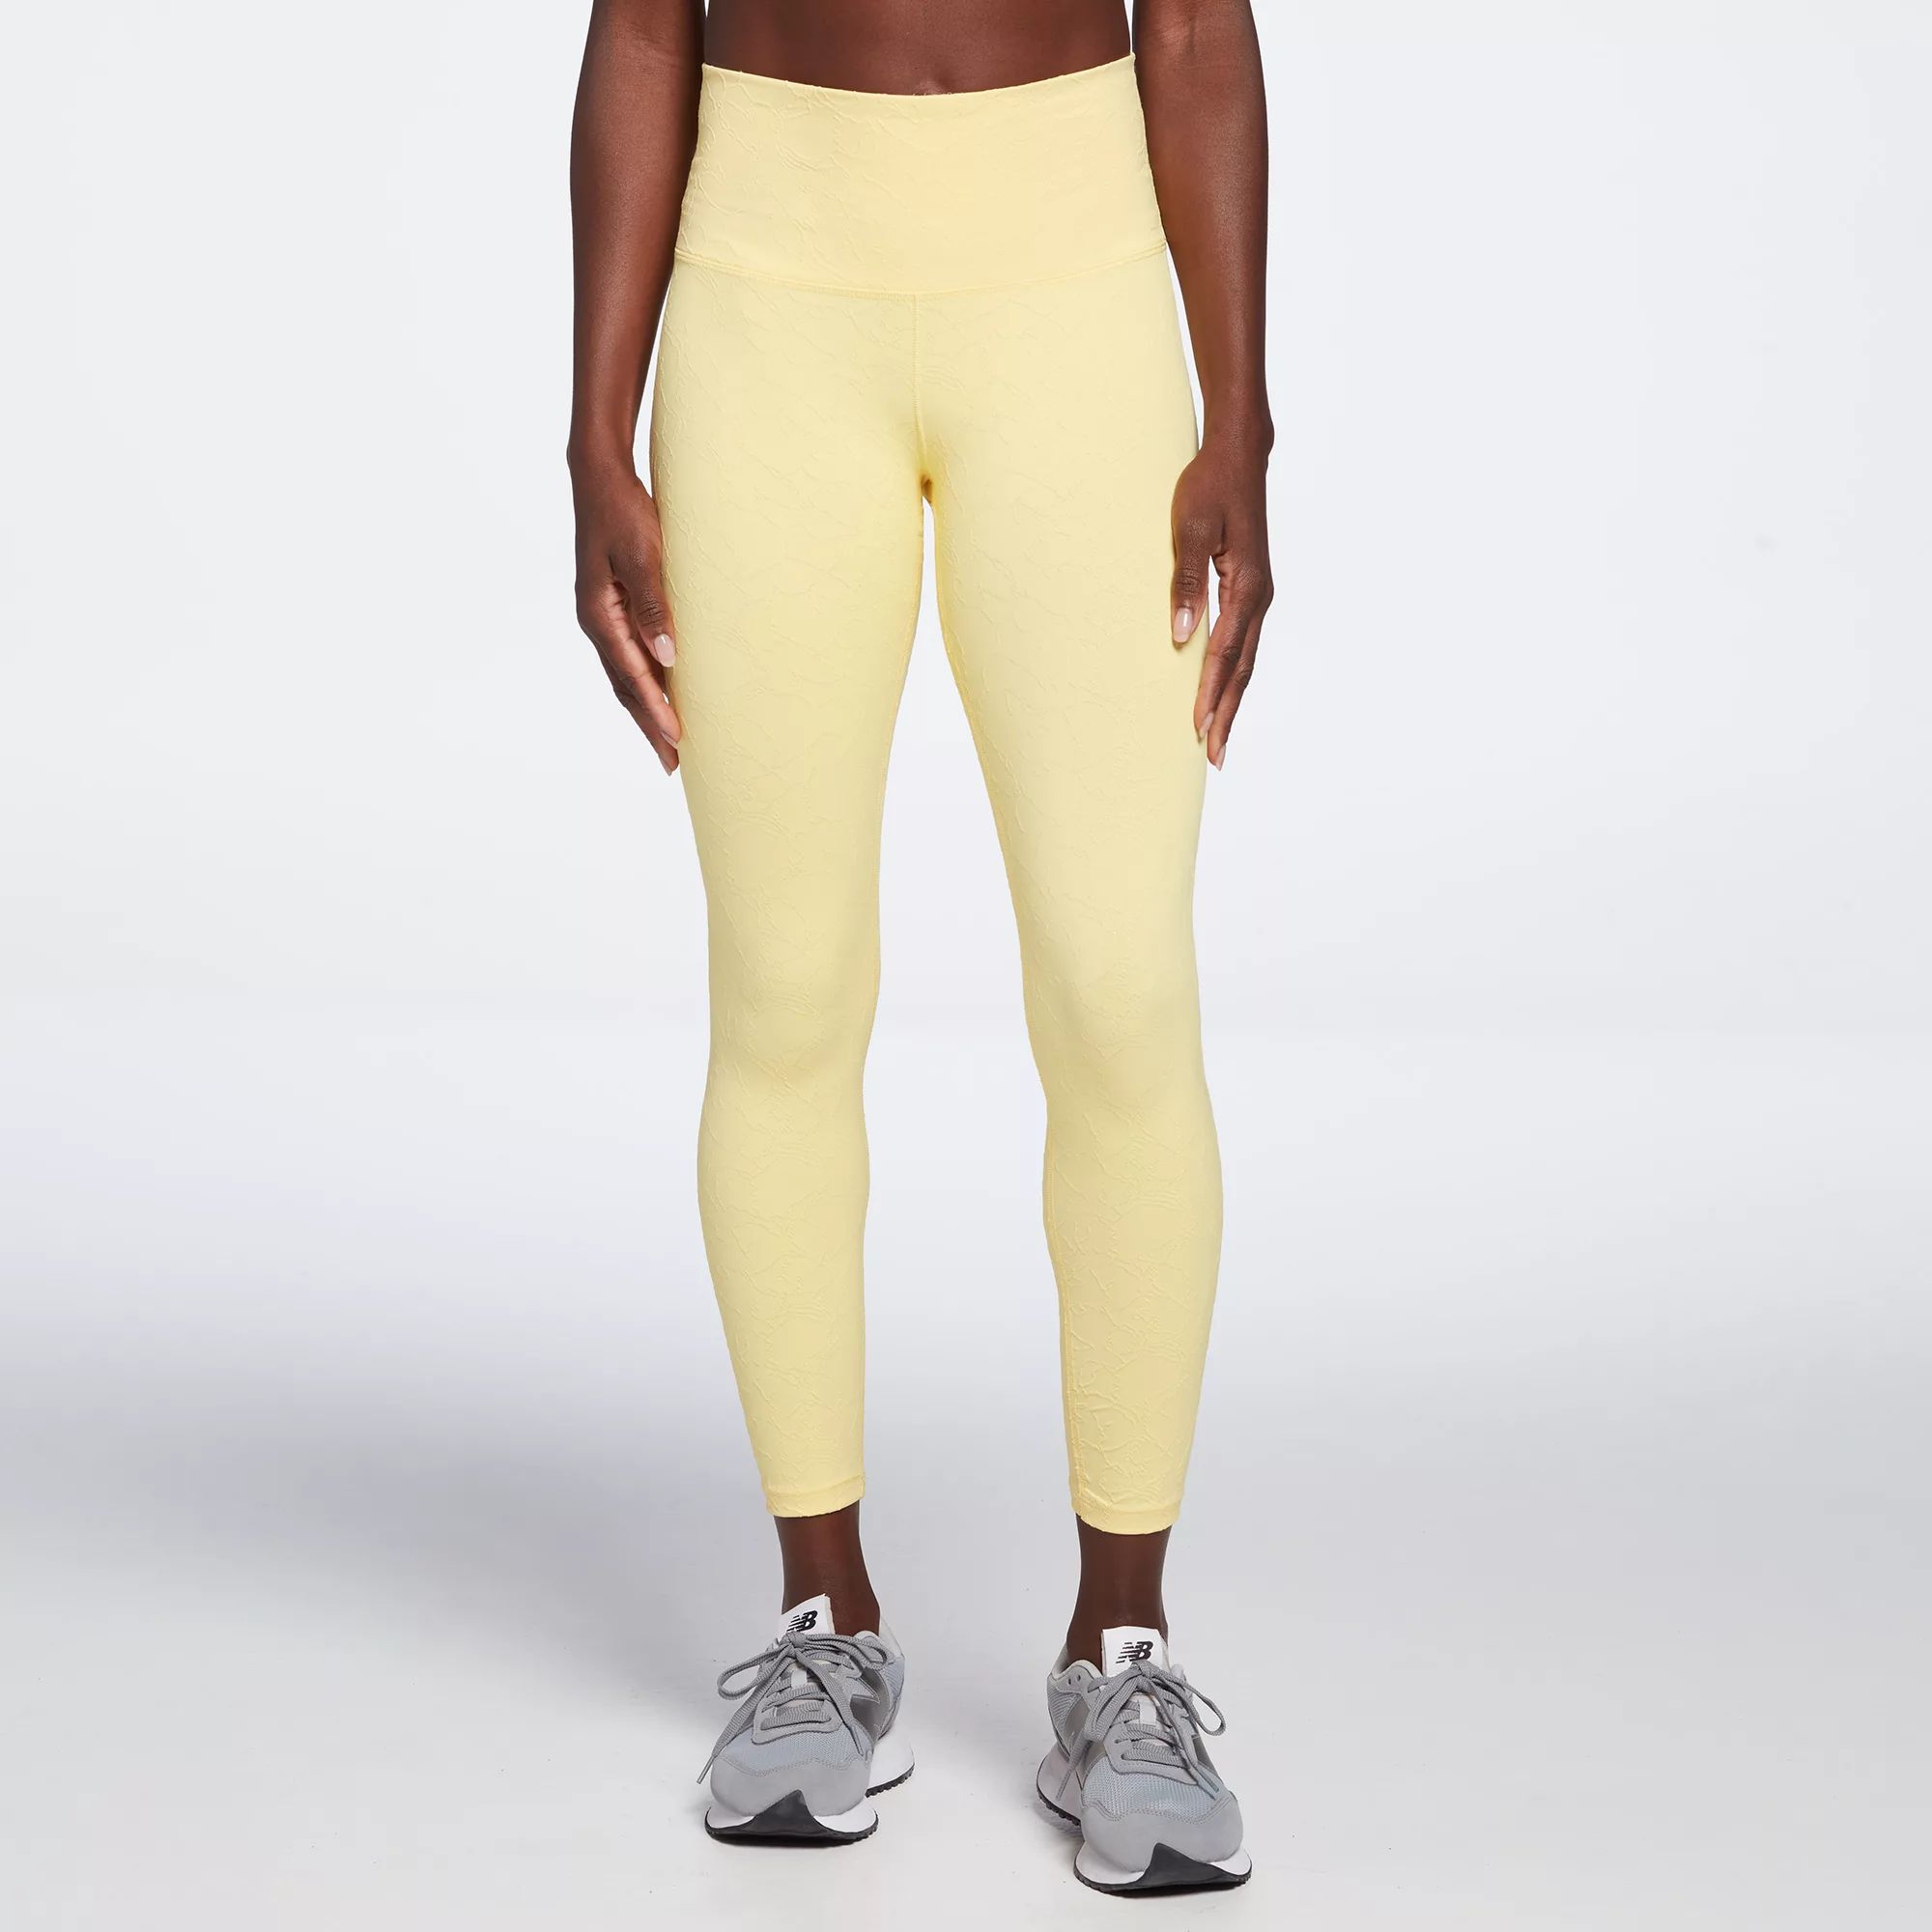 CALIA Women's Essential Jacquard 7/8 Legging, XXS, Golden Wheat | Dick's Sporting Goods